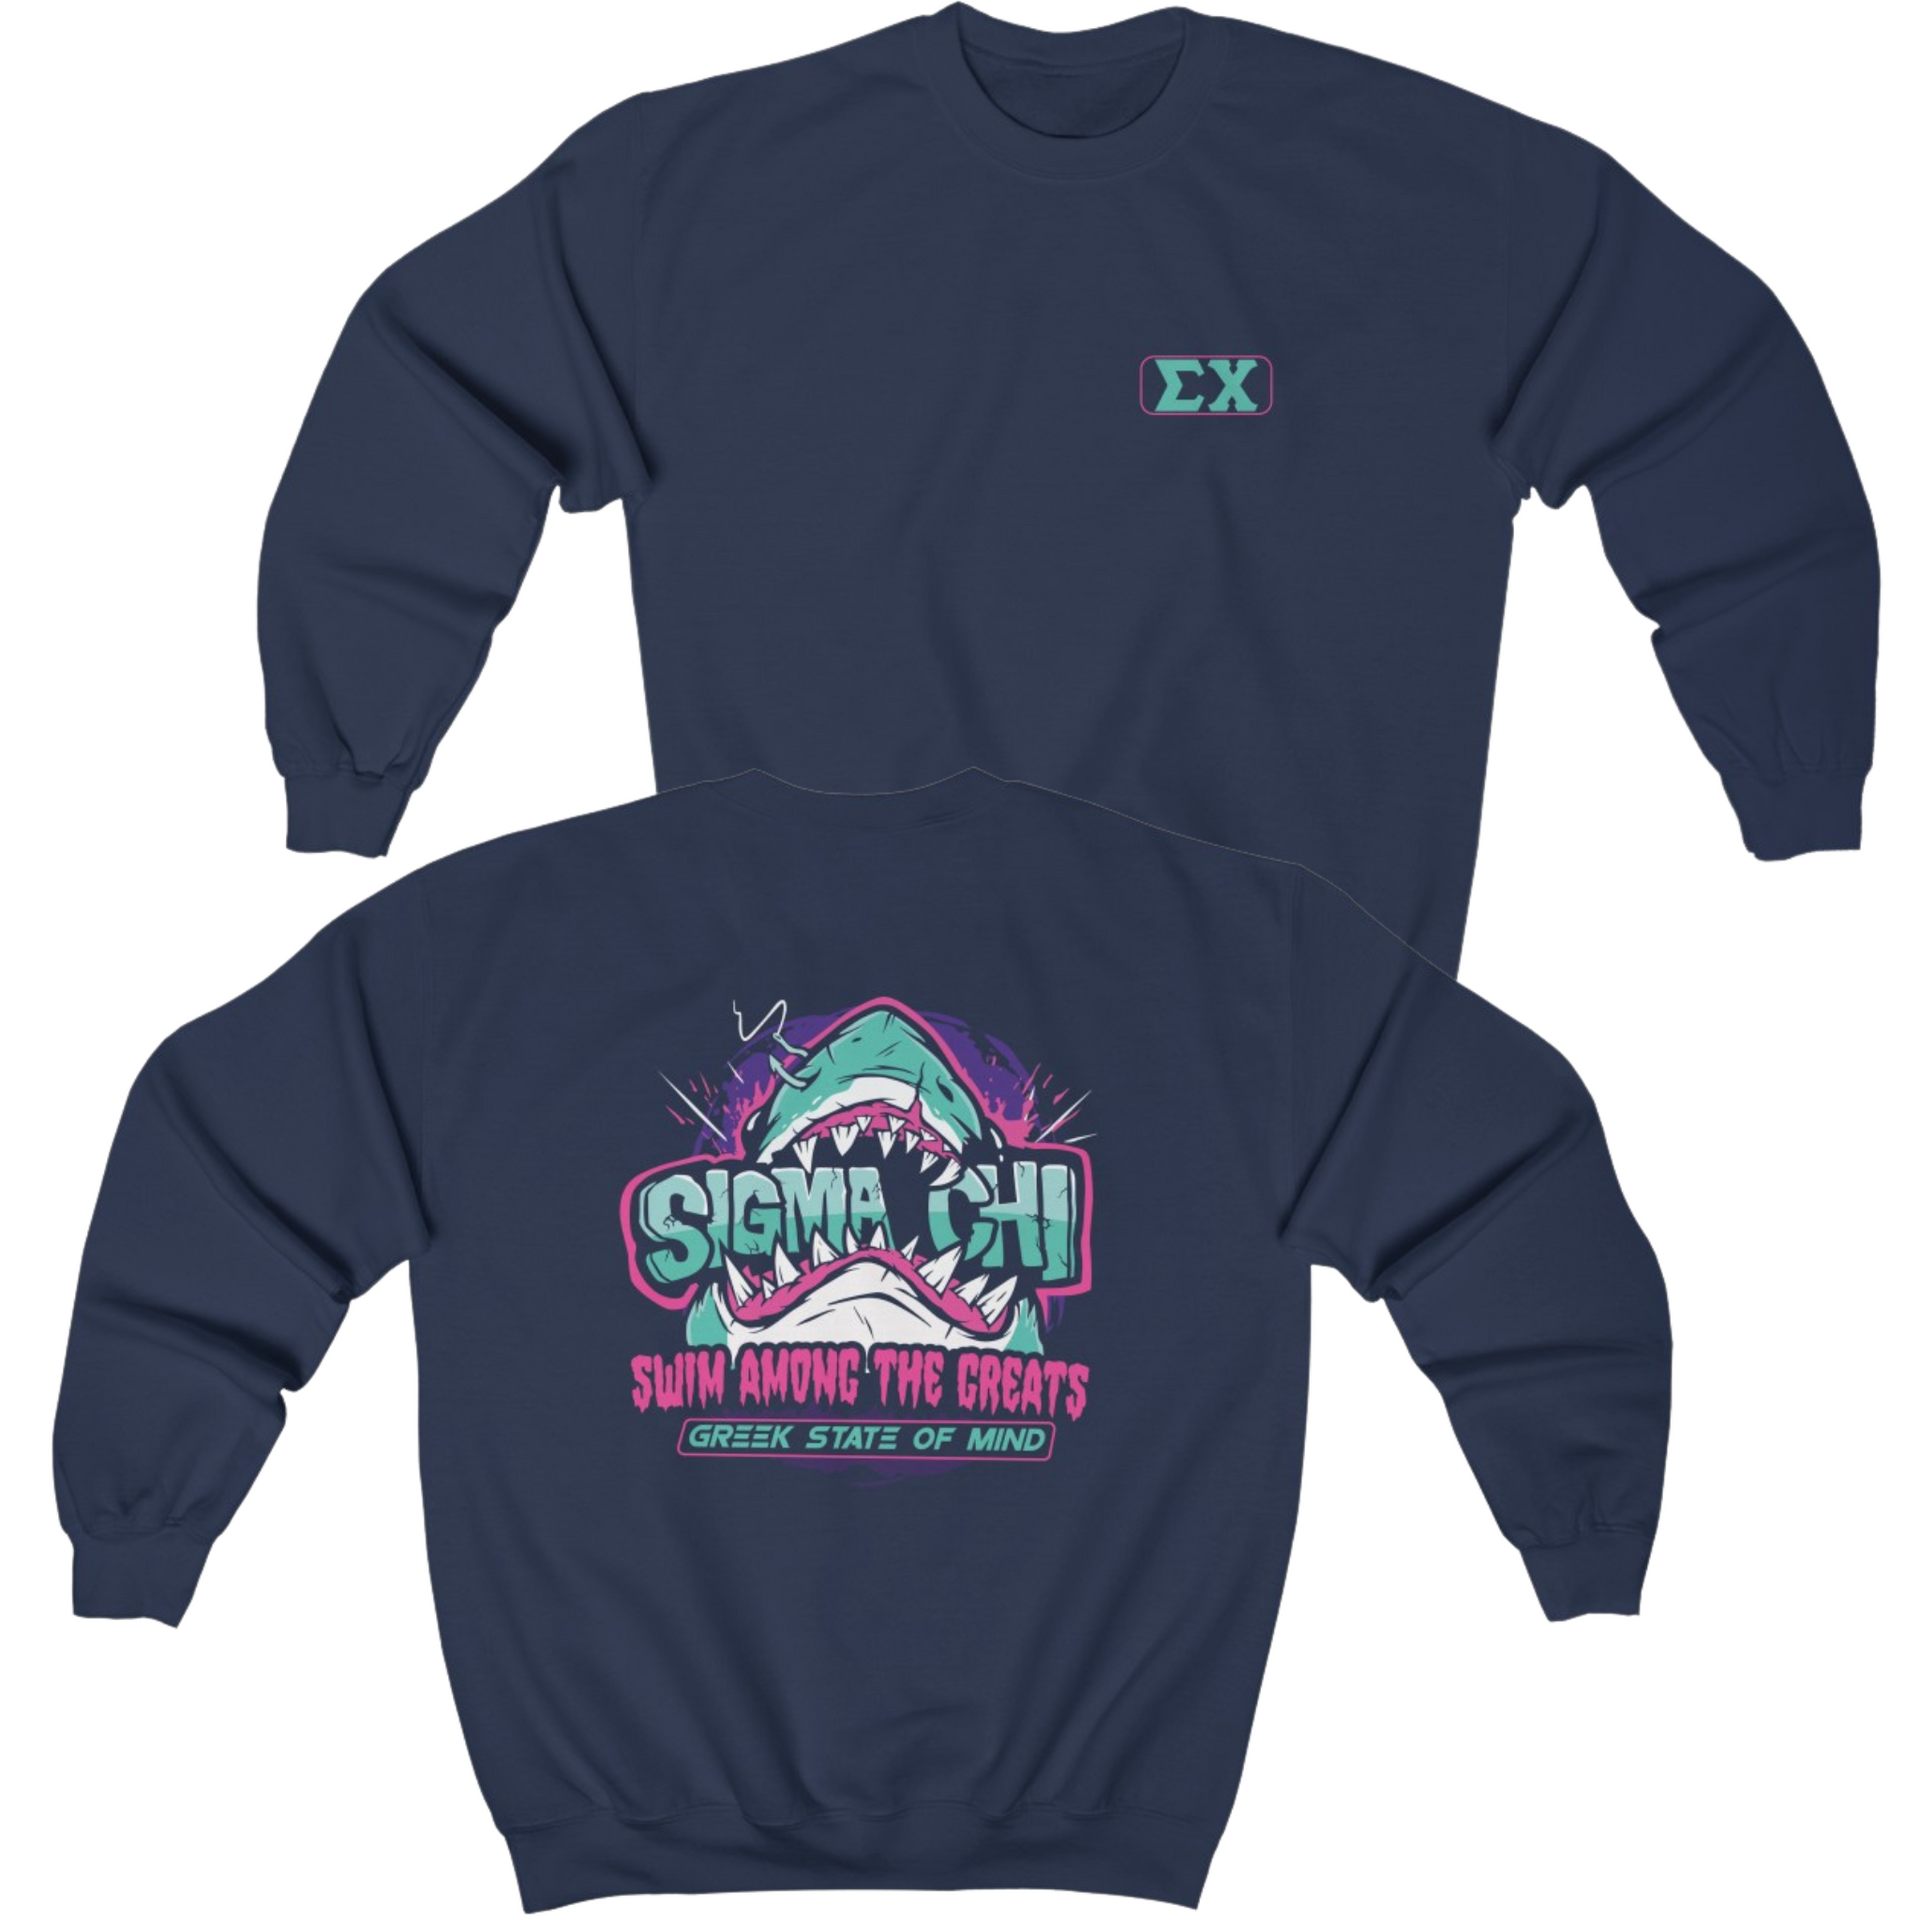 Navy Sigma Chi Graphic Crewneck Sweatshirt | The Deep End | Sigma Chi Fraternity Merch House